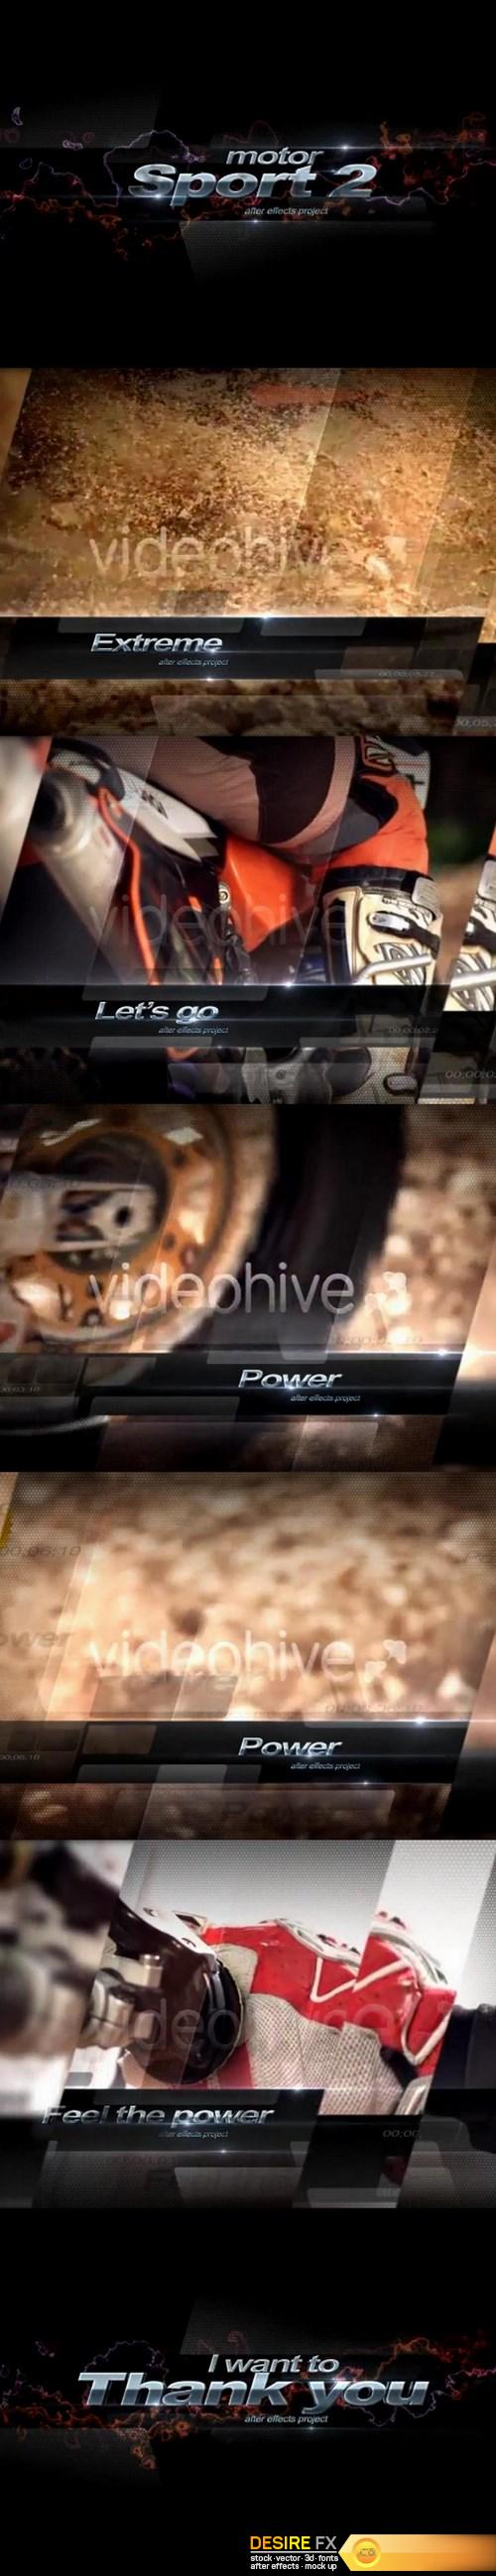 Videohive 5615009 Motor Sport 2